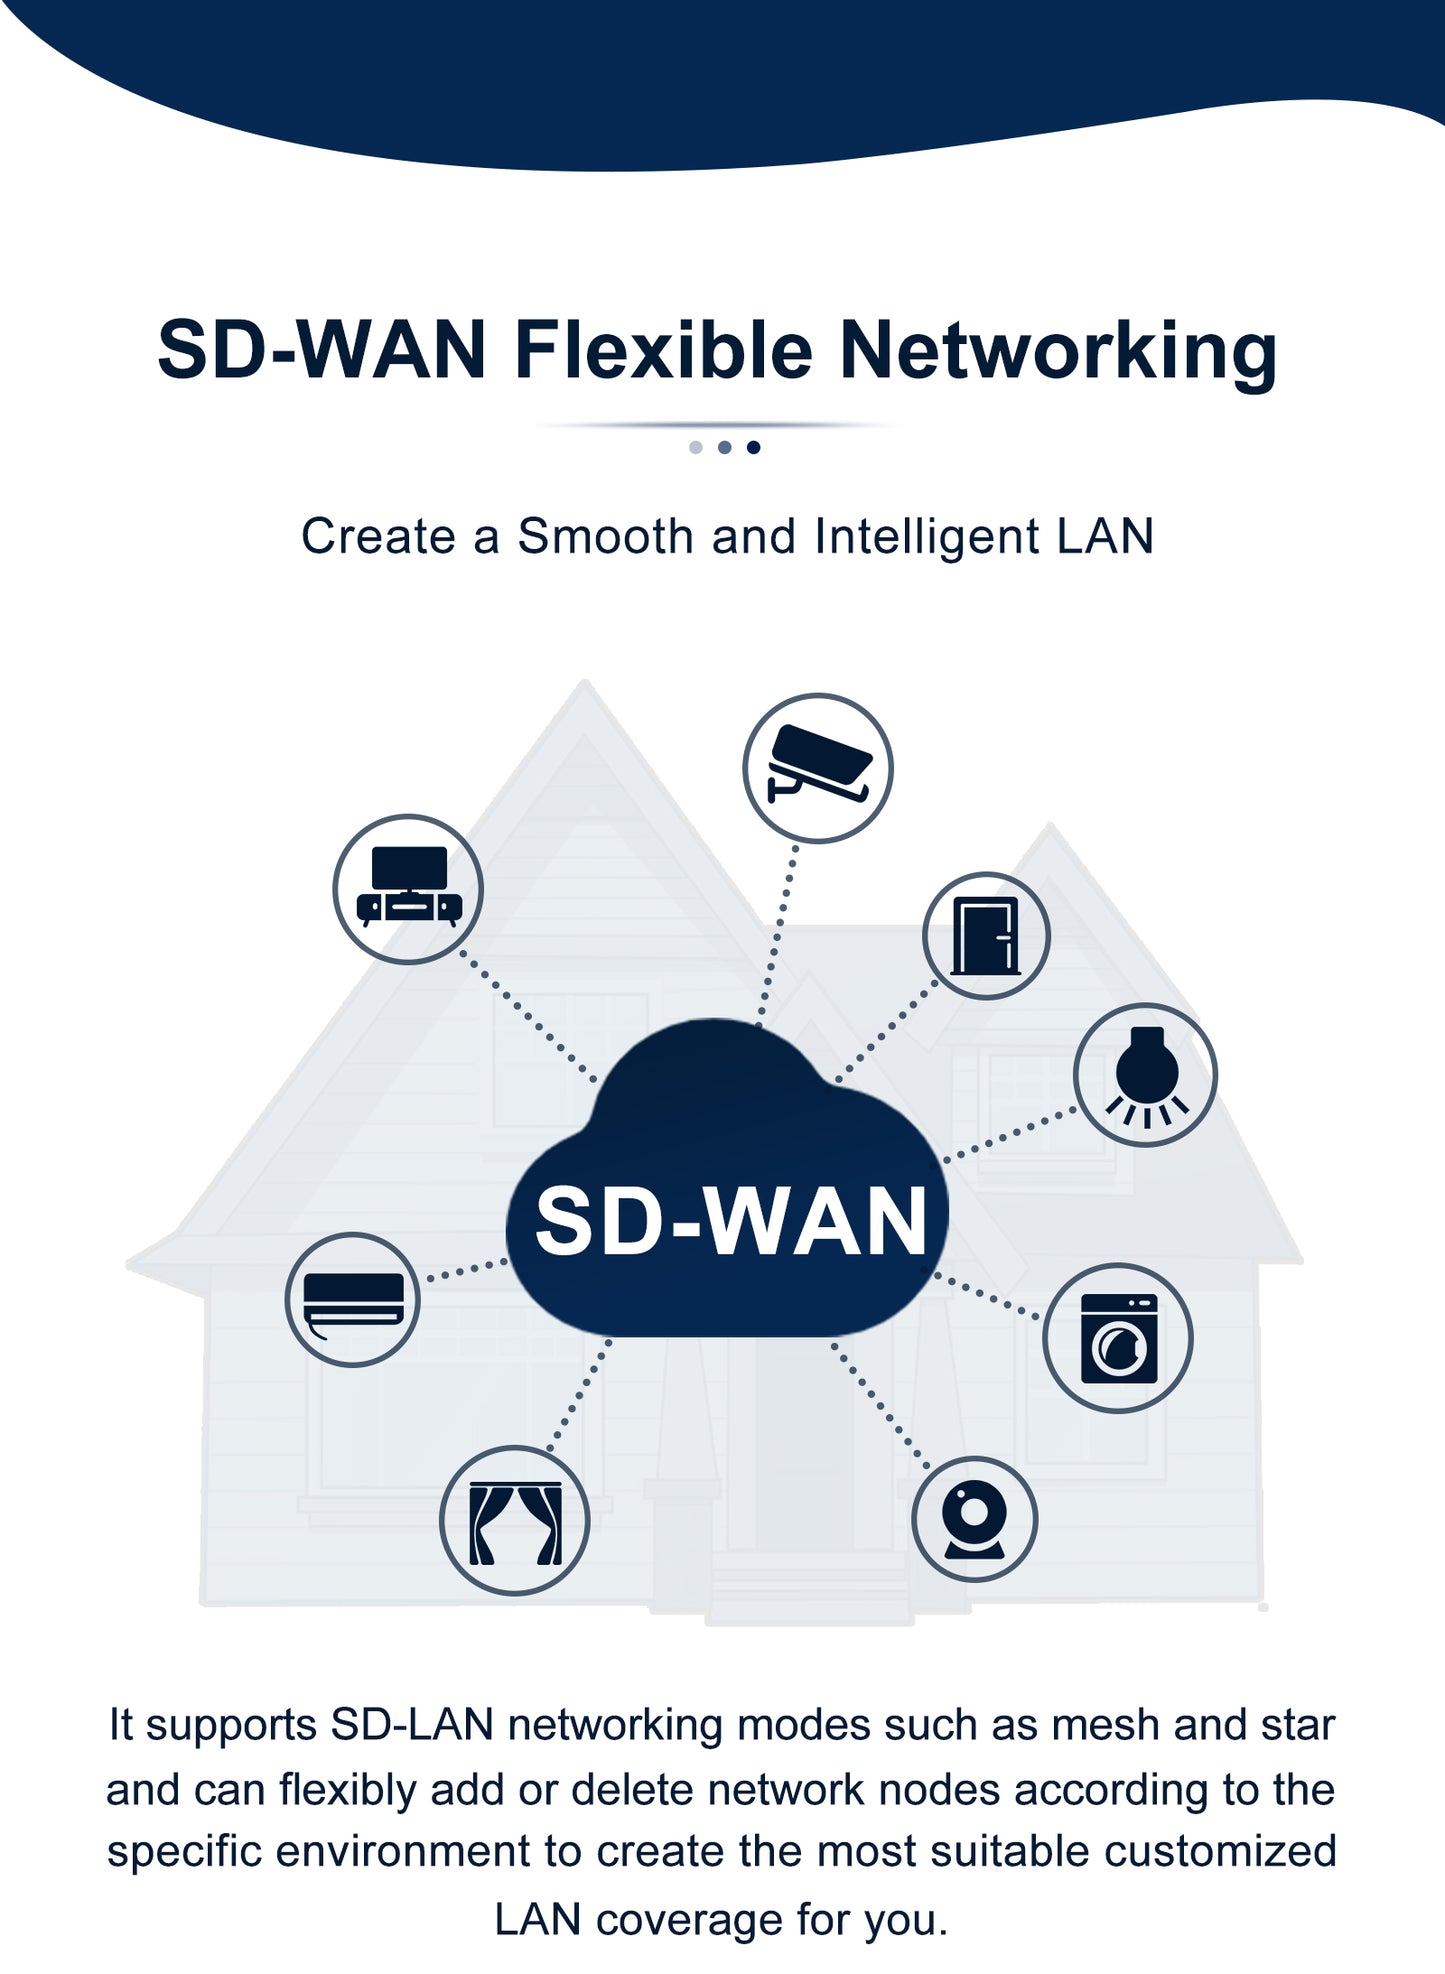 SD-WAN flexible networking